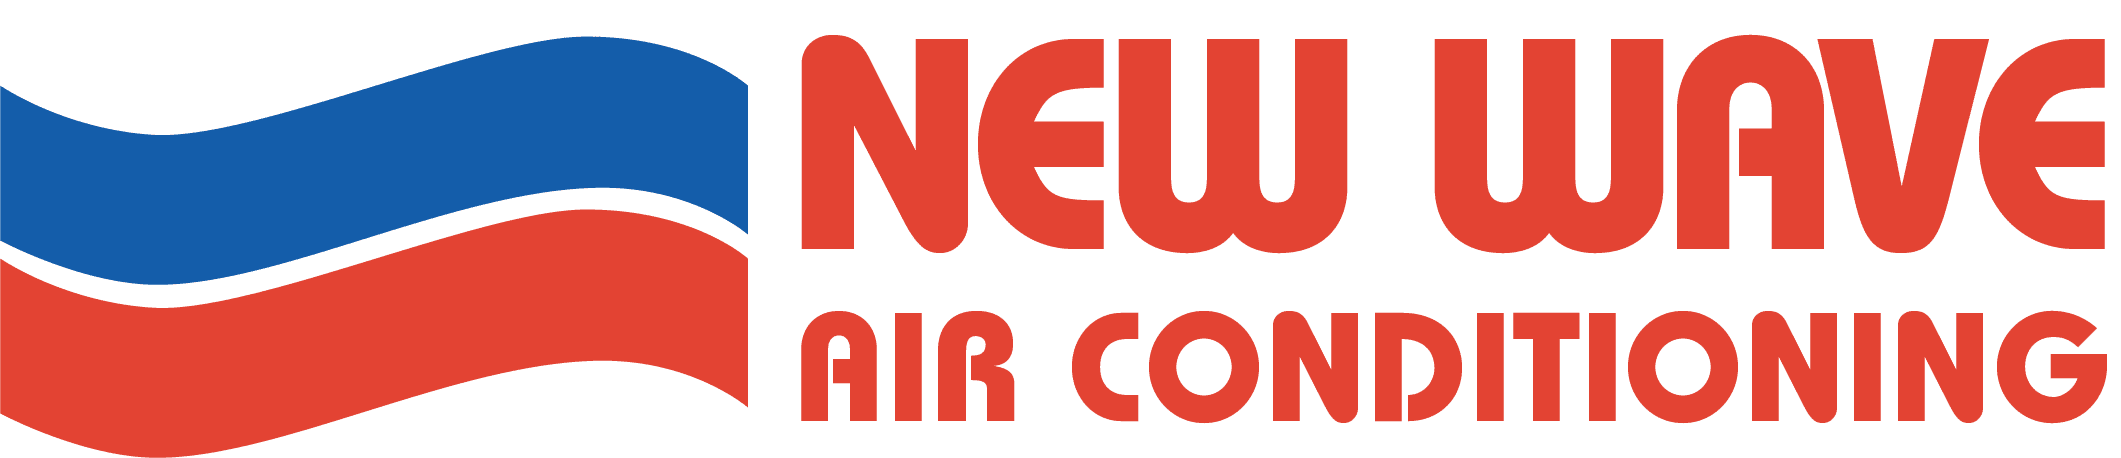 New Wave Air Logo